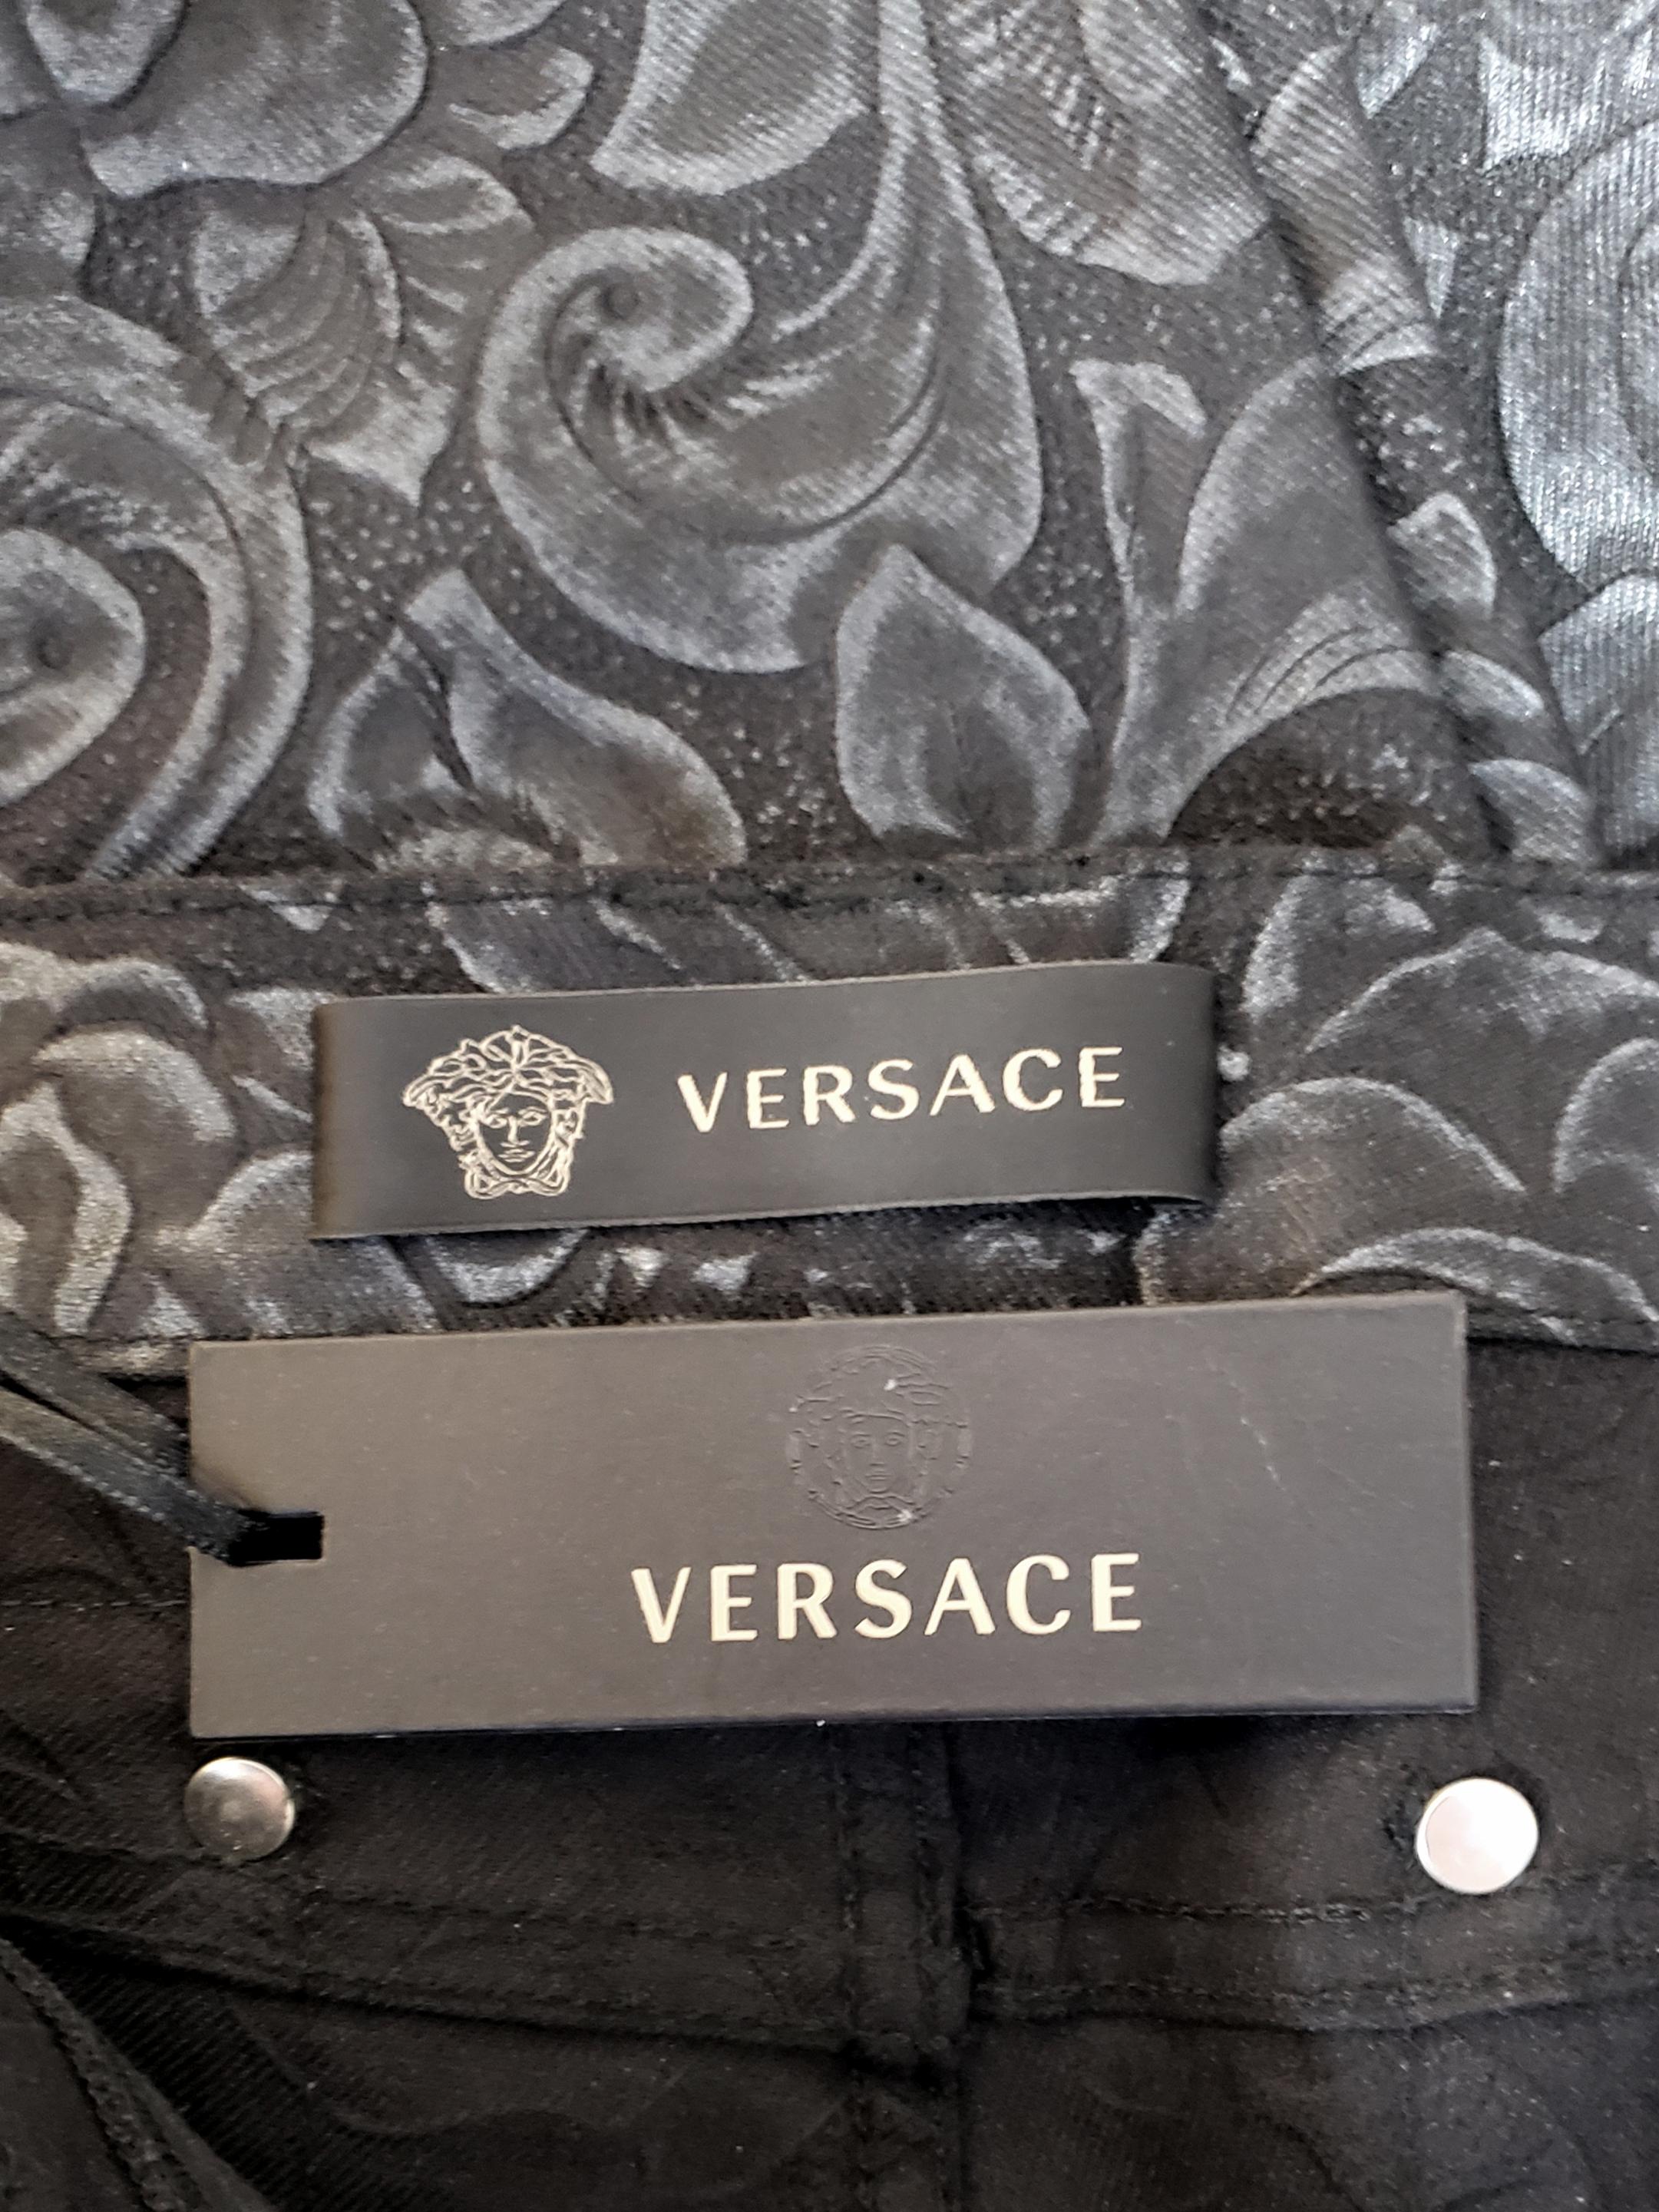 S/S 2014 Look # 5 VERSACE BLACK FLORAL JEANS PANTS size 26 For Sale 3